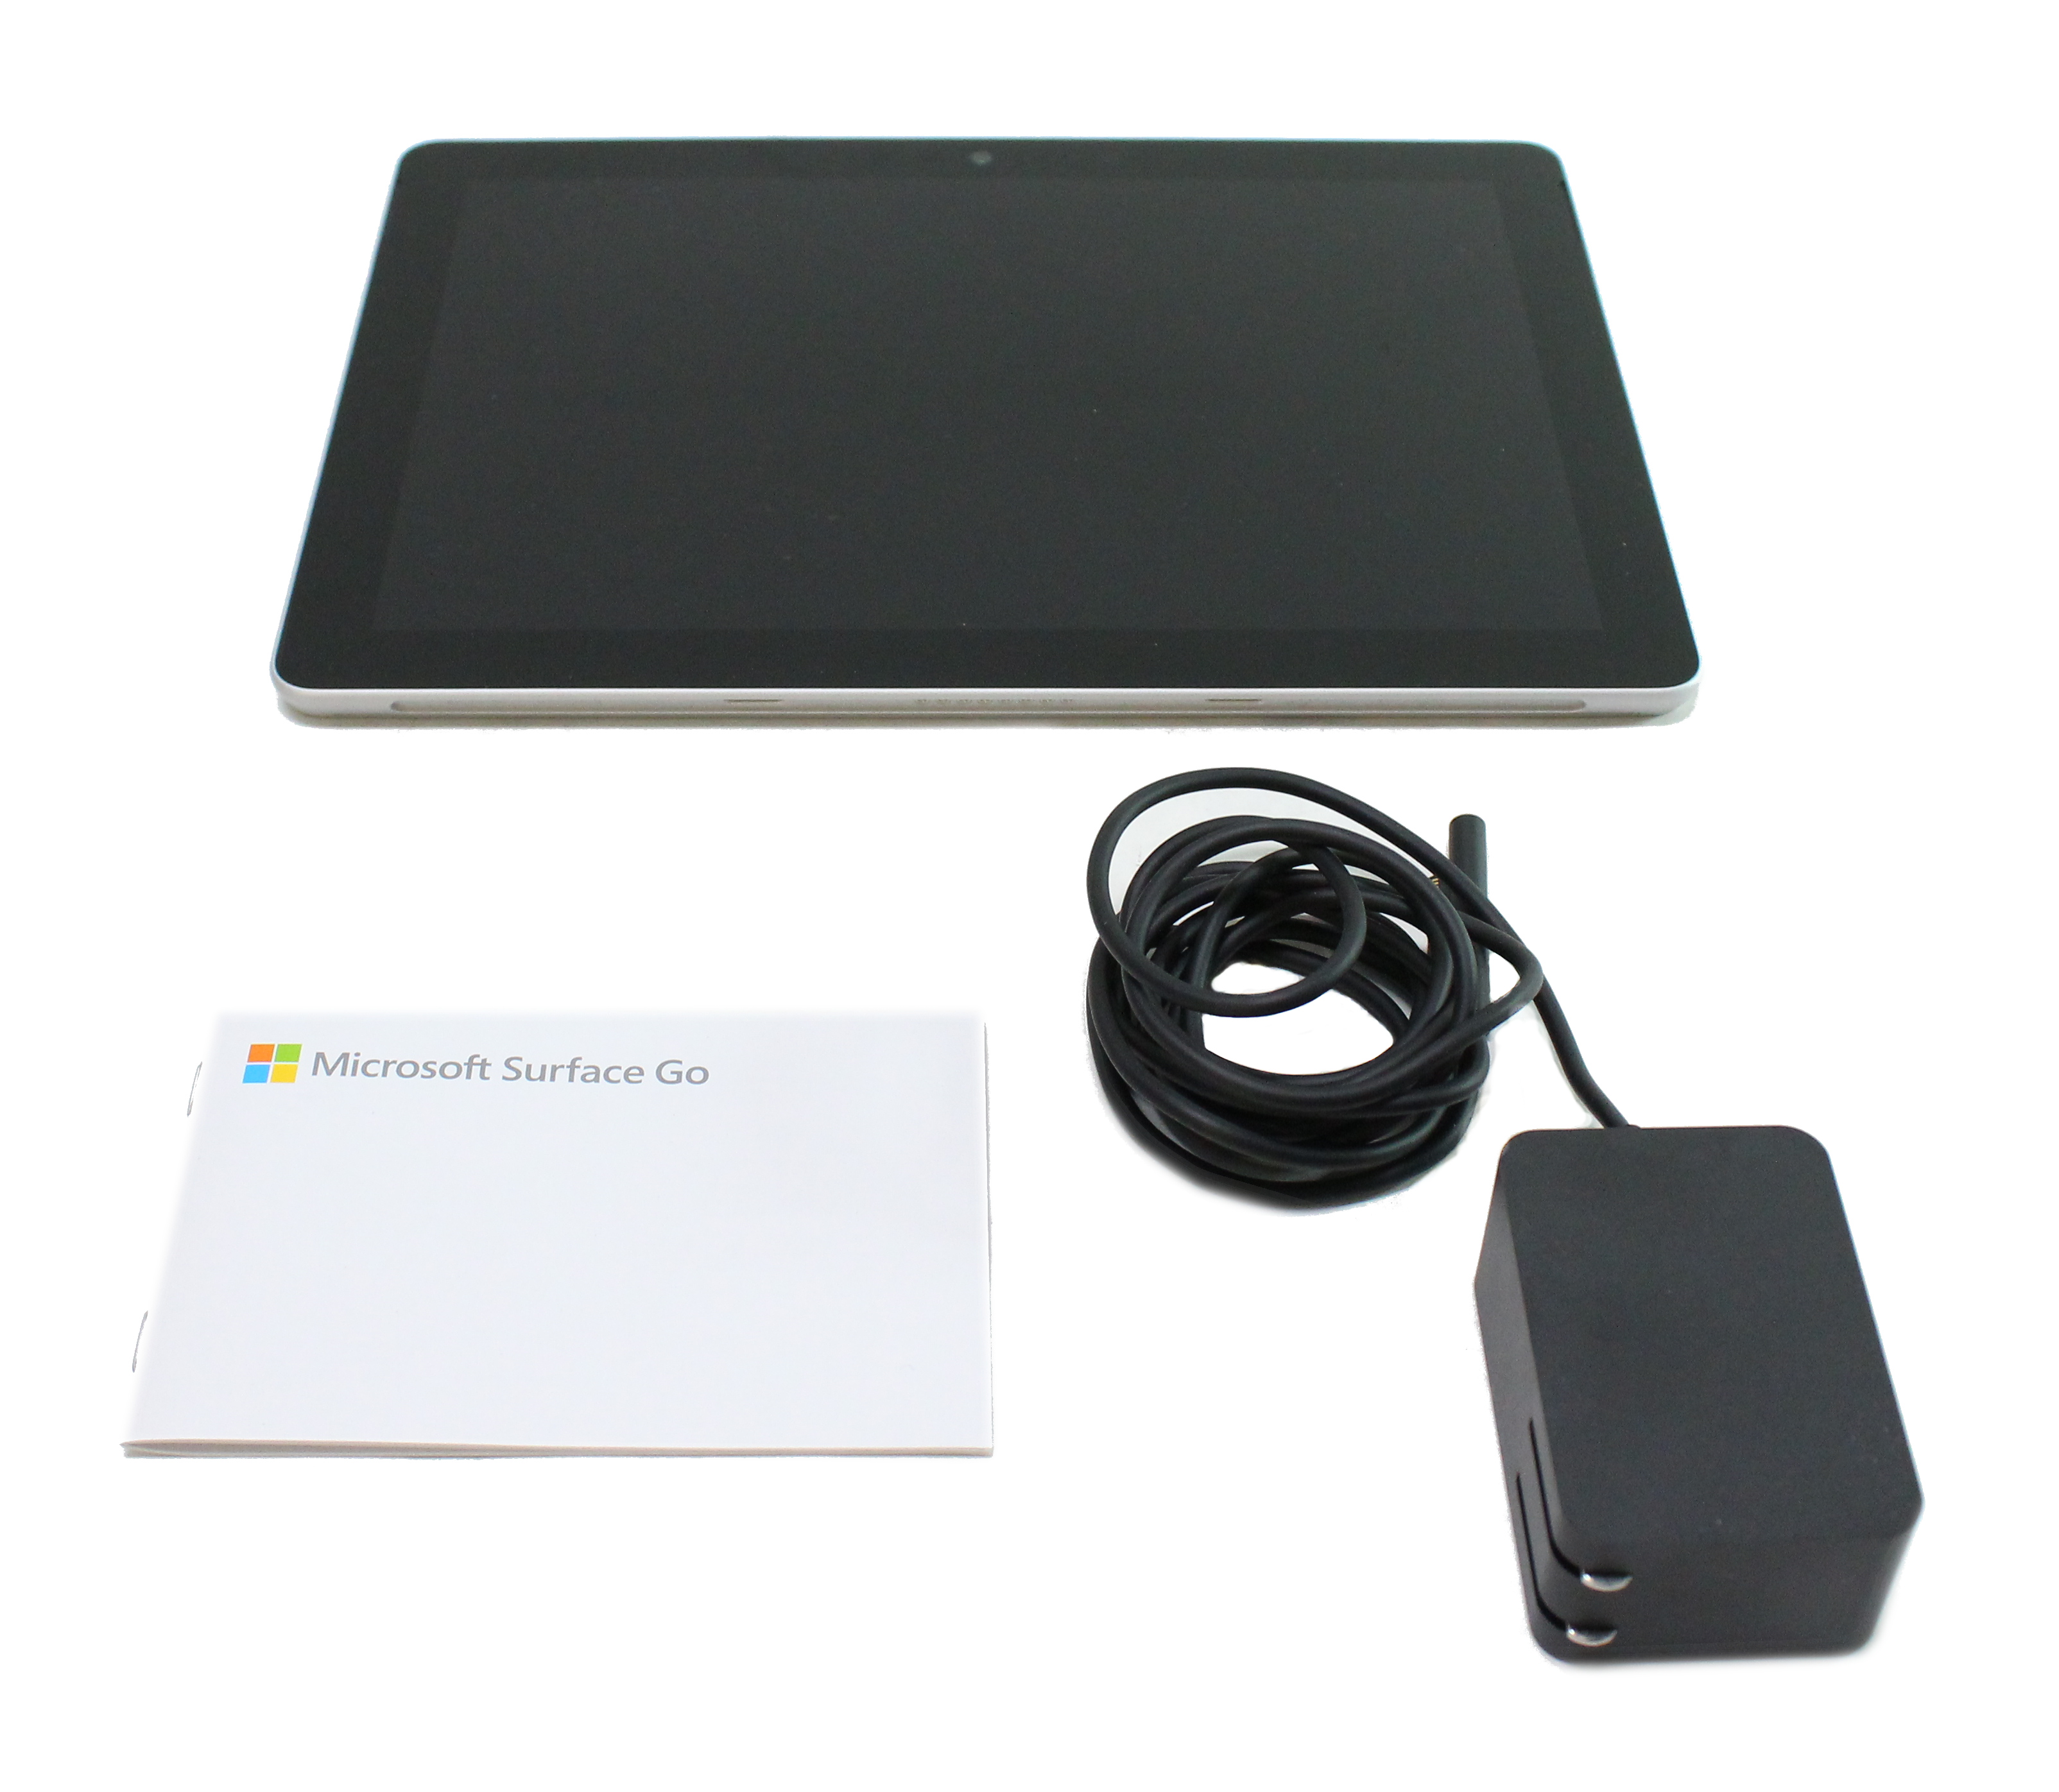 Microsoft Surface Go / Model:1824-